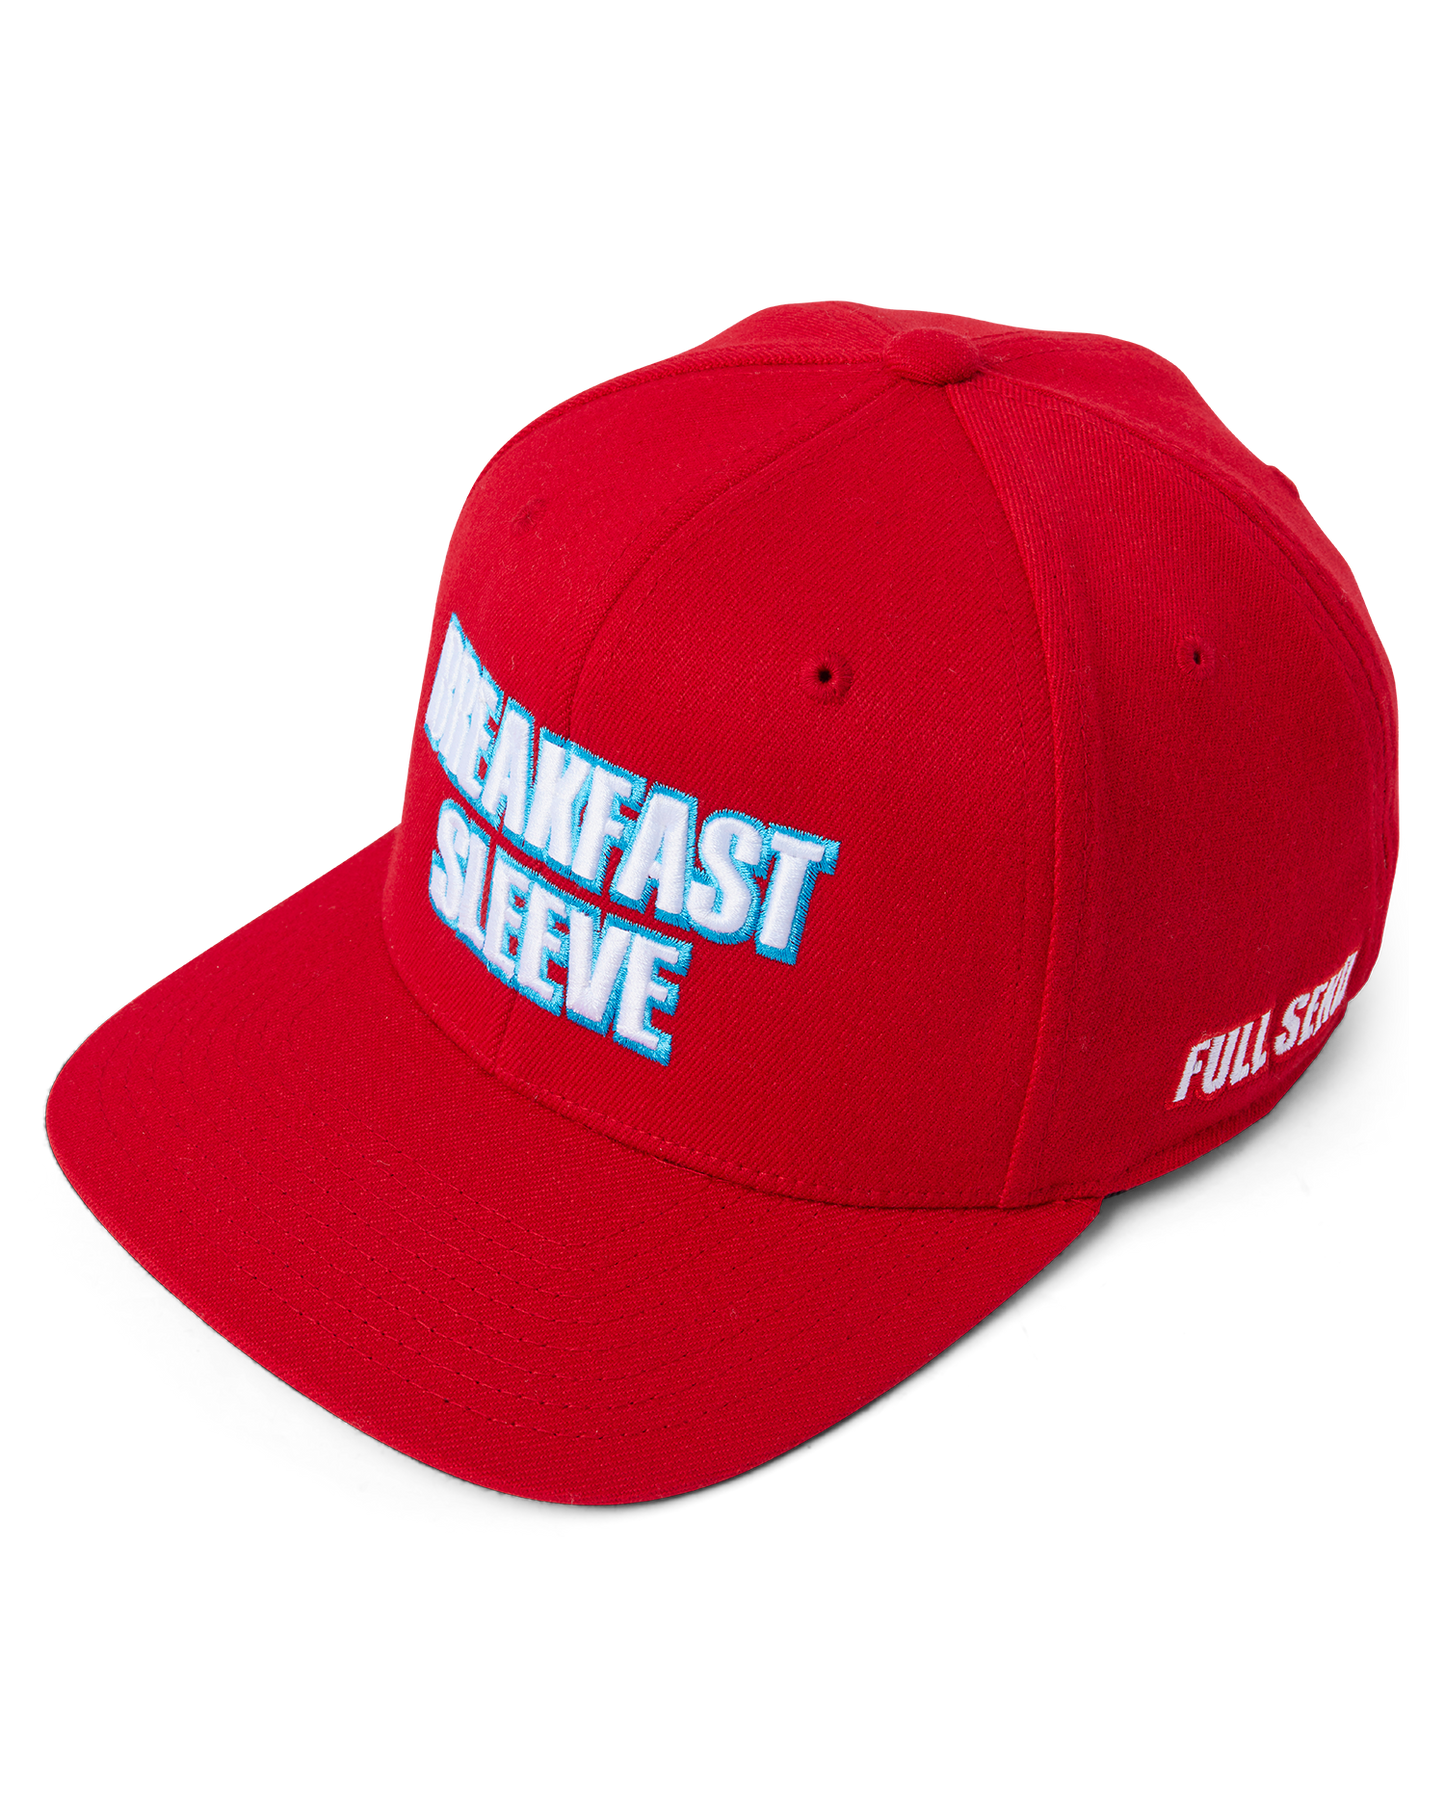 Breakfast Sleeve Snapback Hat